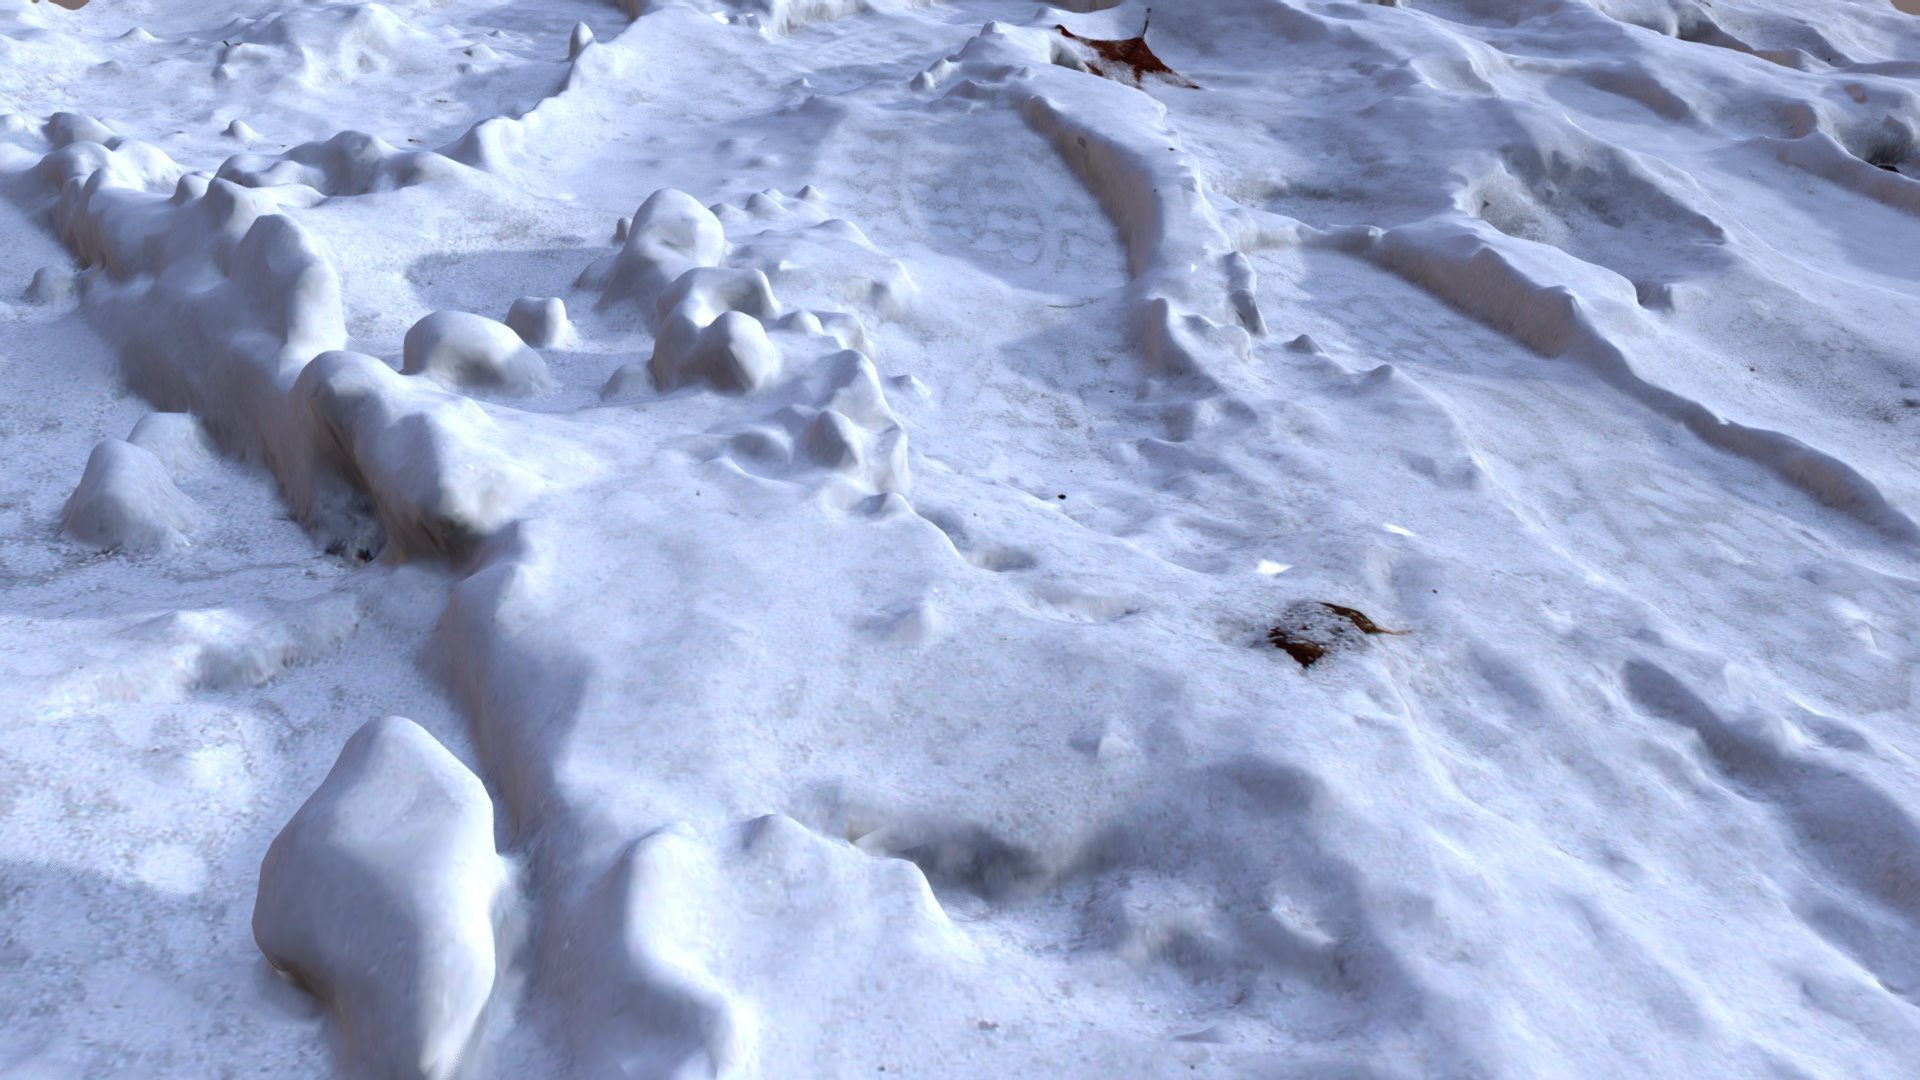 Snow Tracks